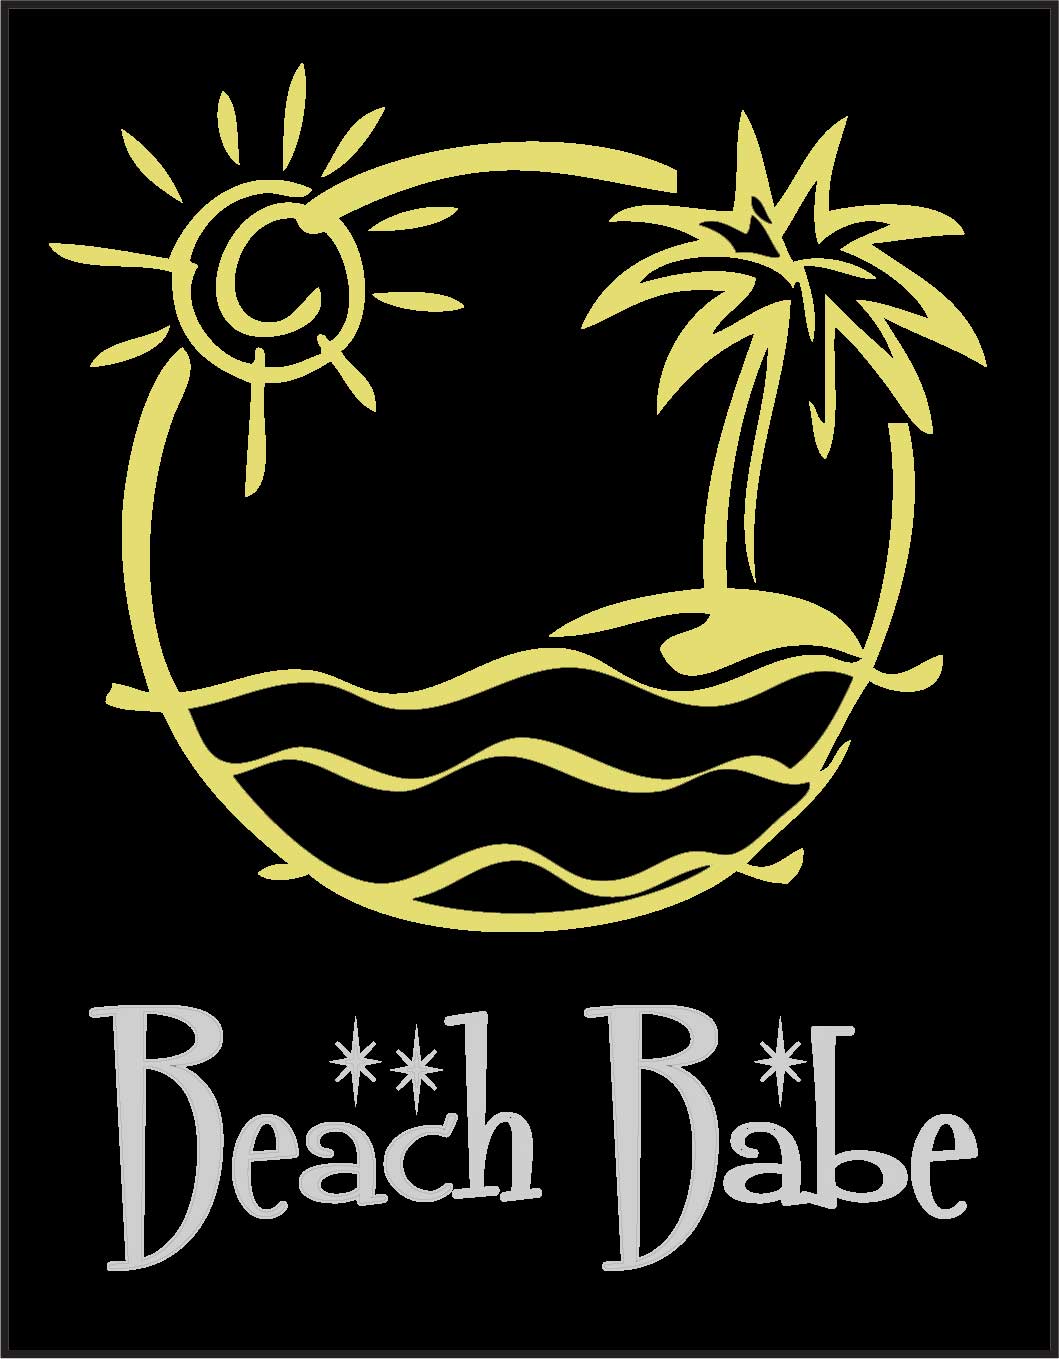 Beachbabe